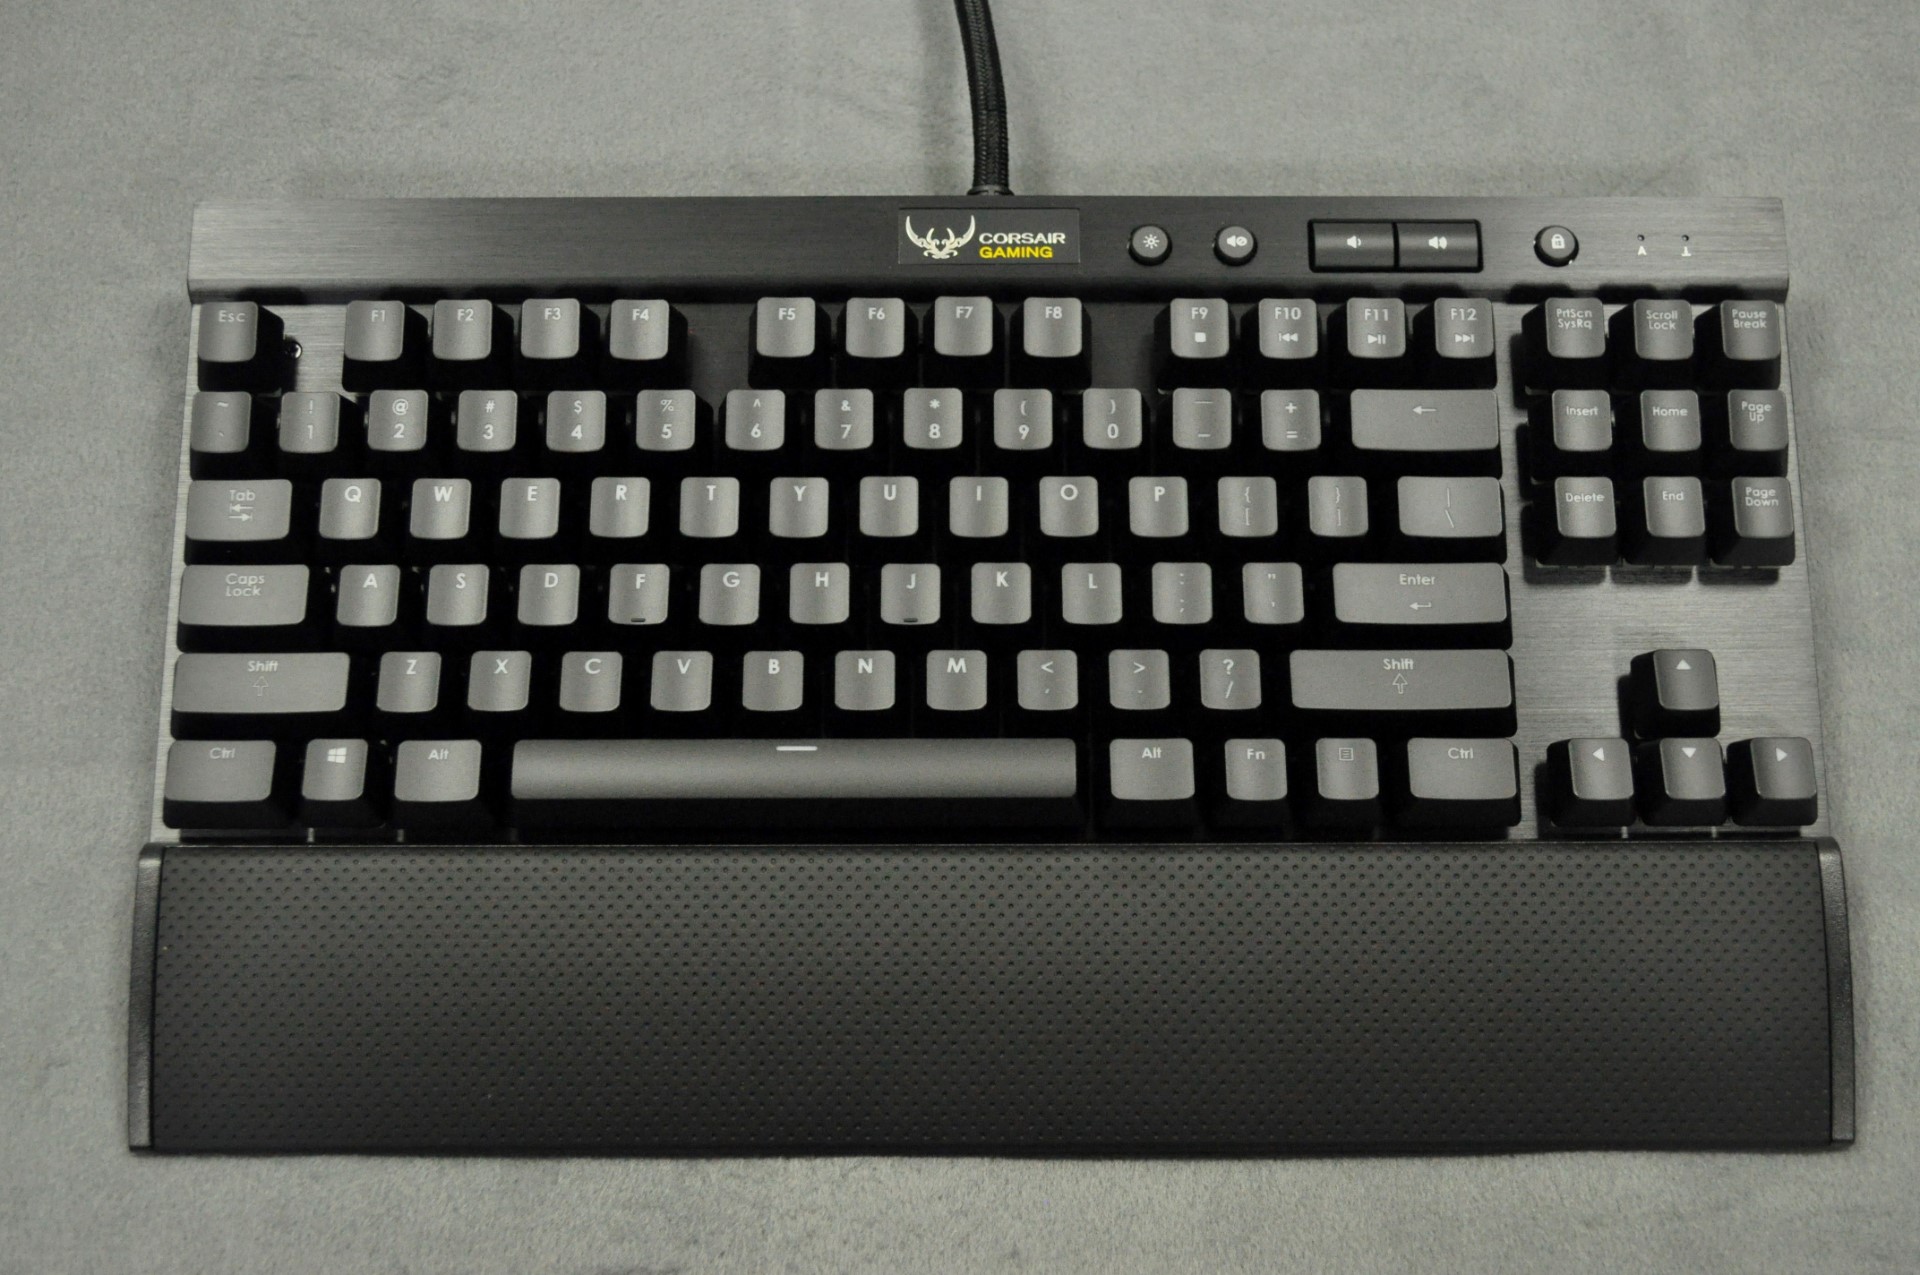 Corsair Gaming K65 RGB & K95 RGB Mechanical Gaming Keyboards - The Gaming Keyboards and Mice Range: An Experiential Test